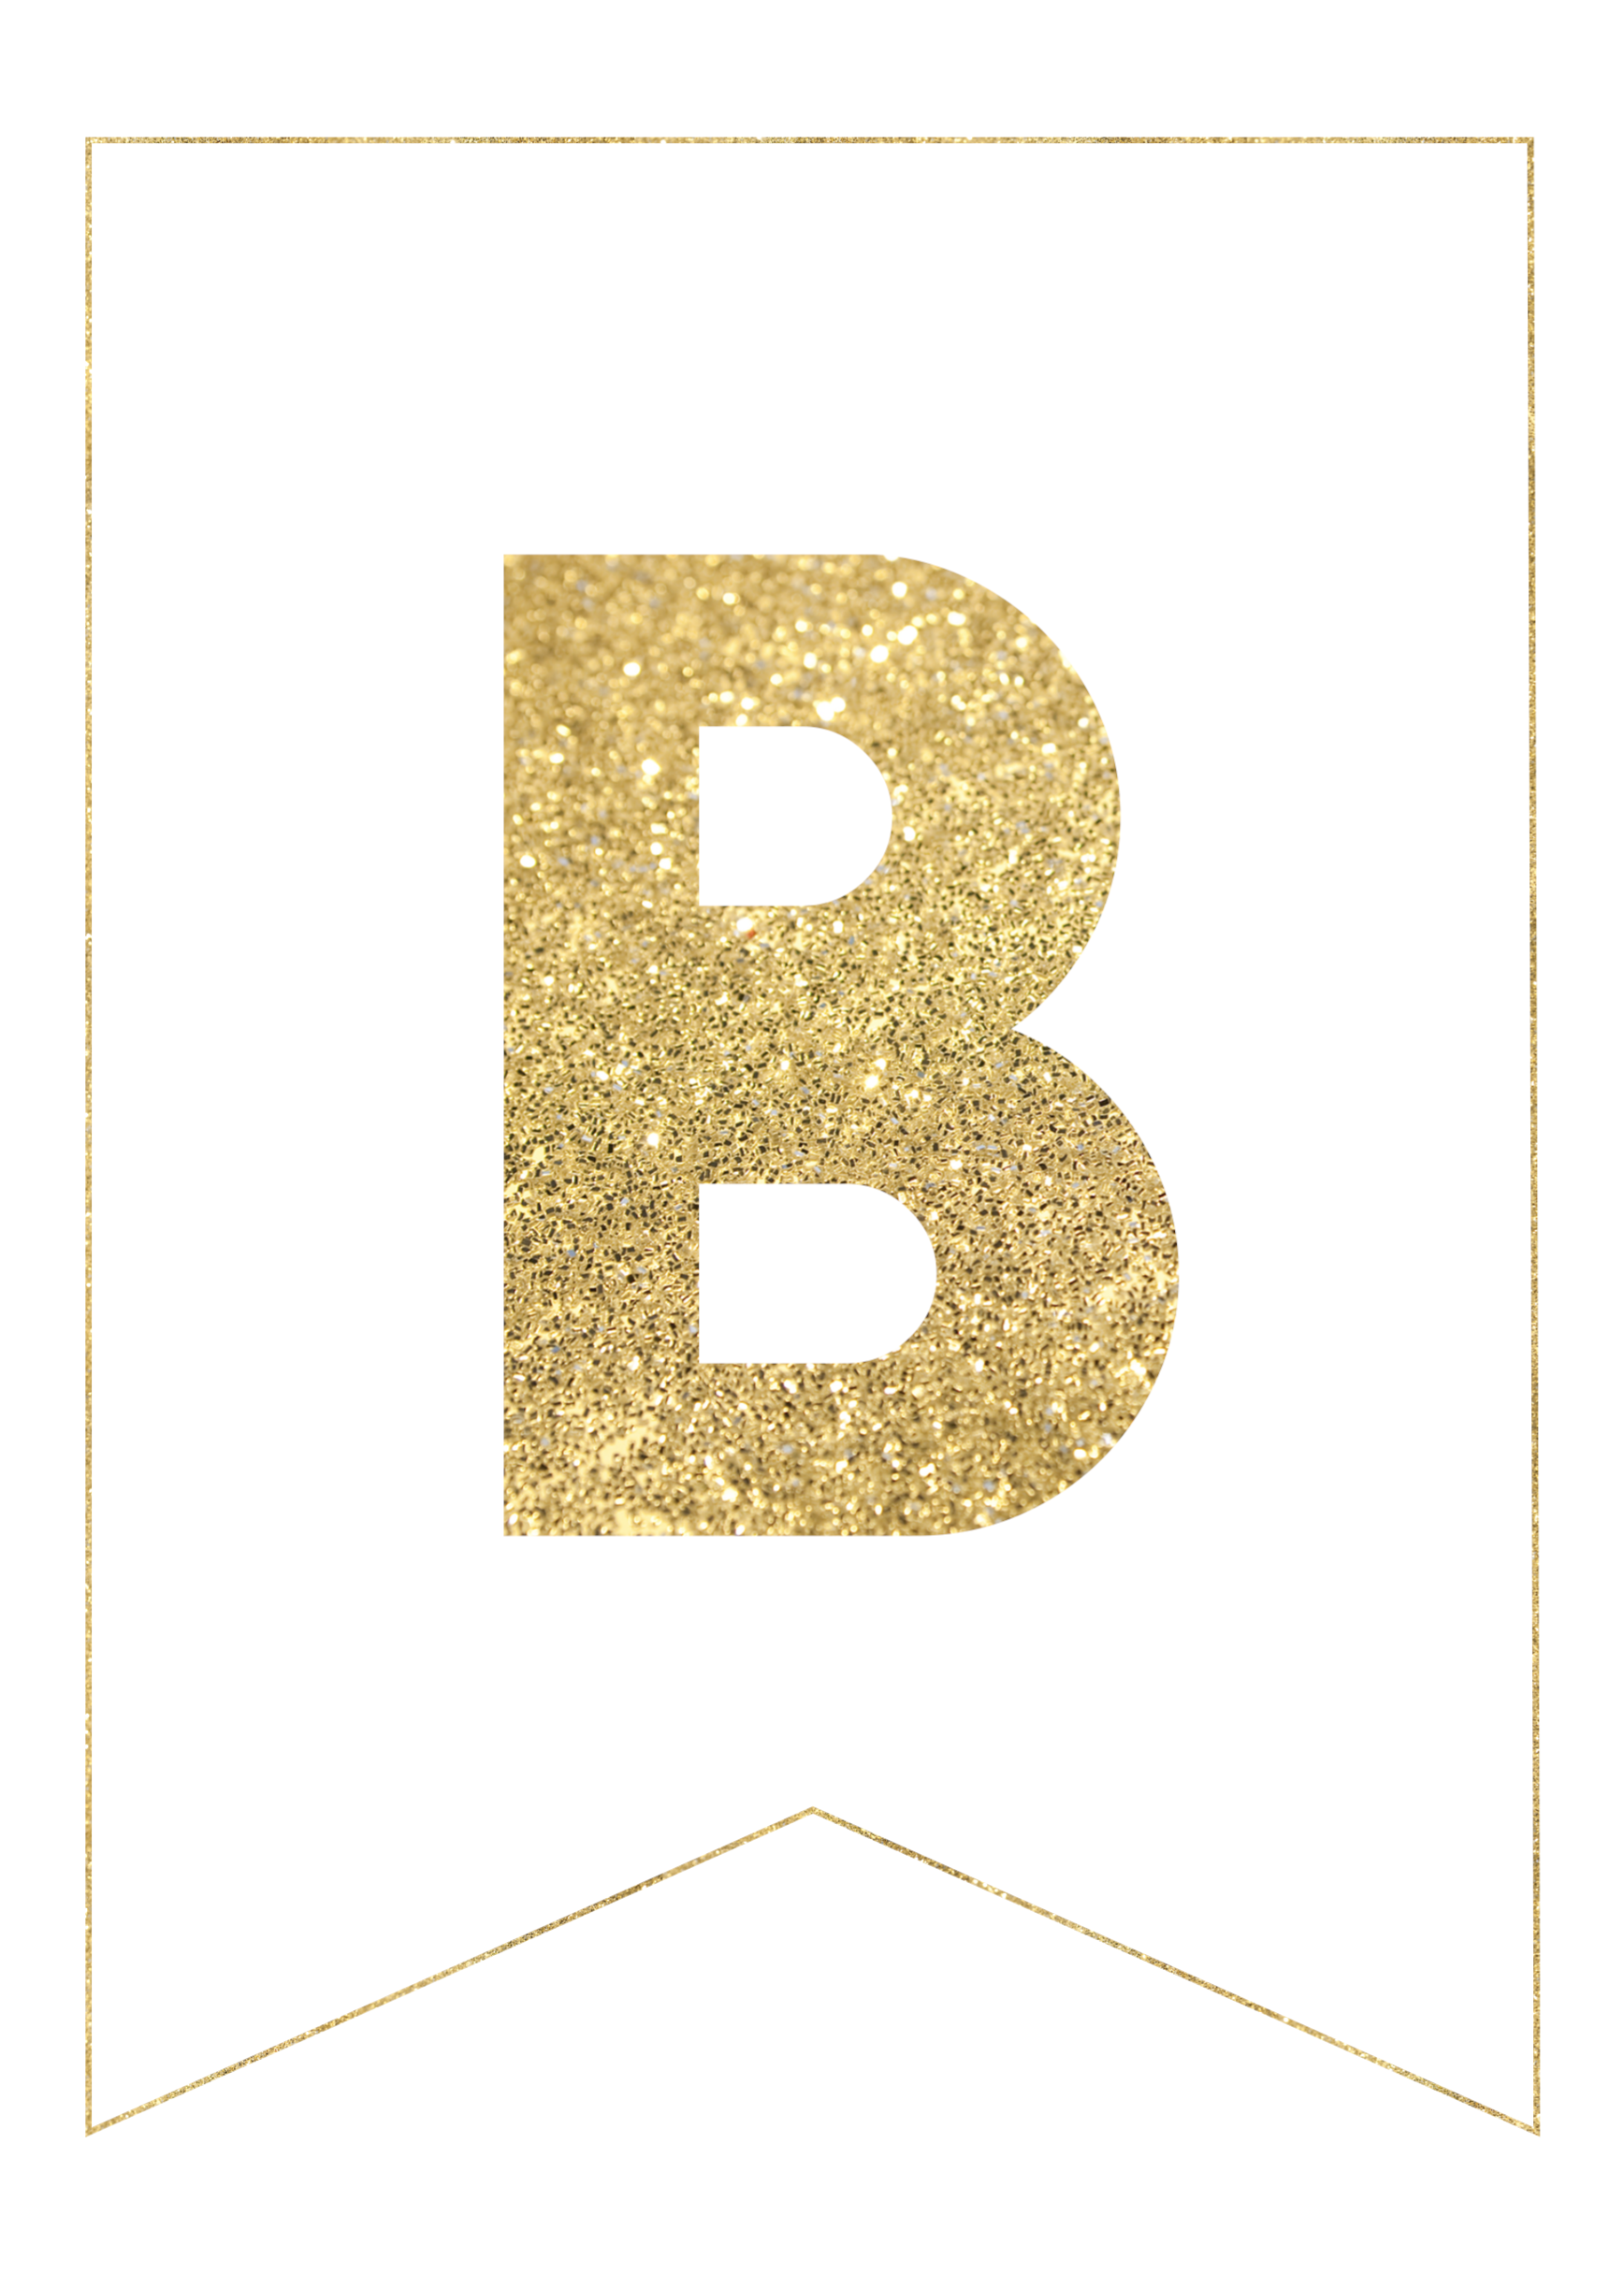 letter b gold